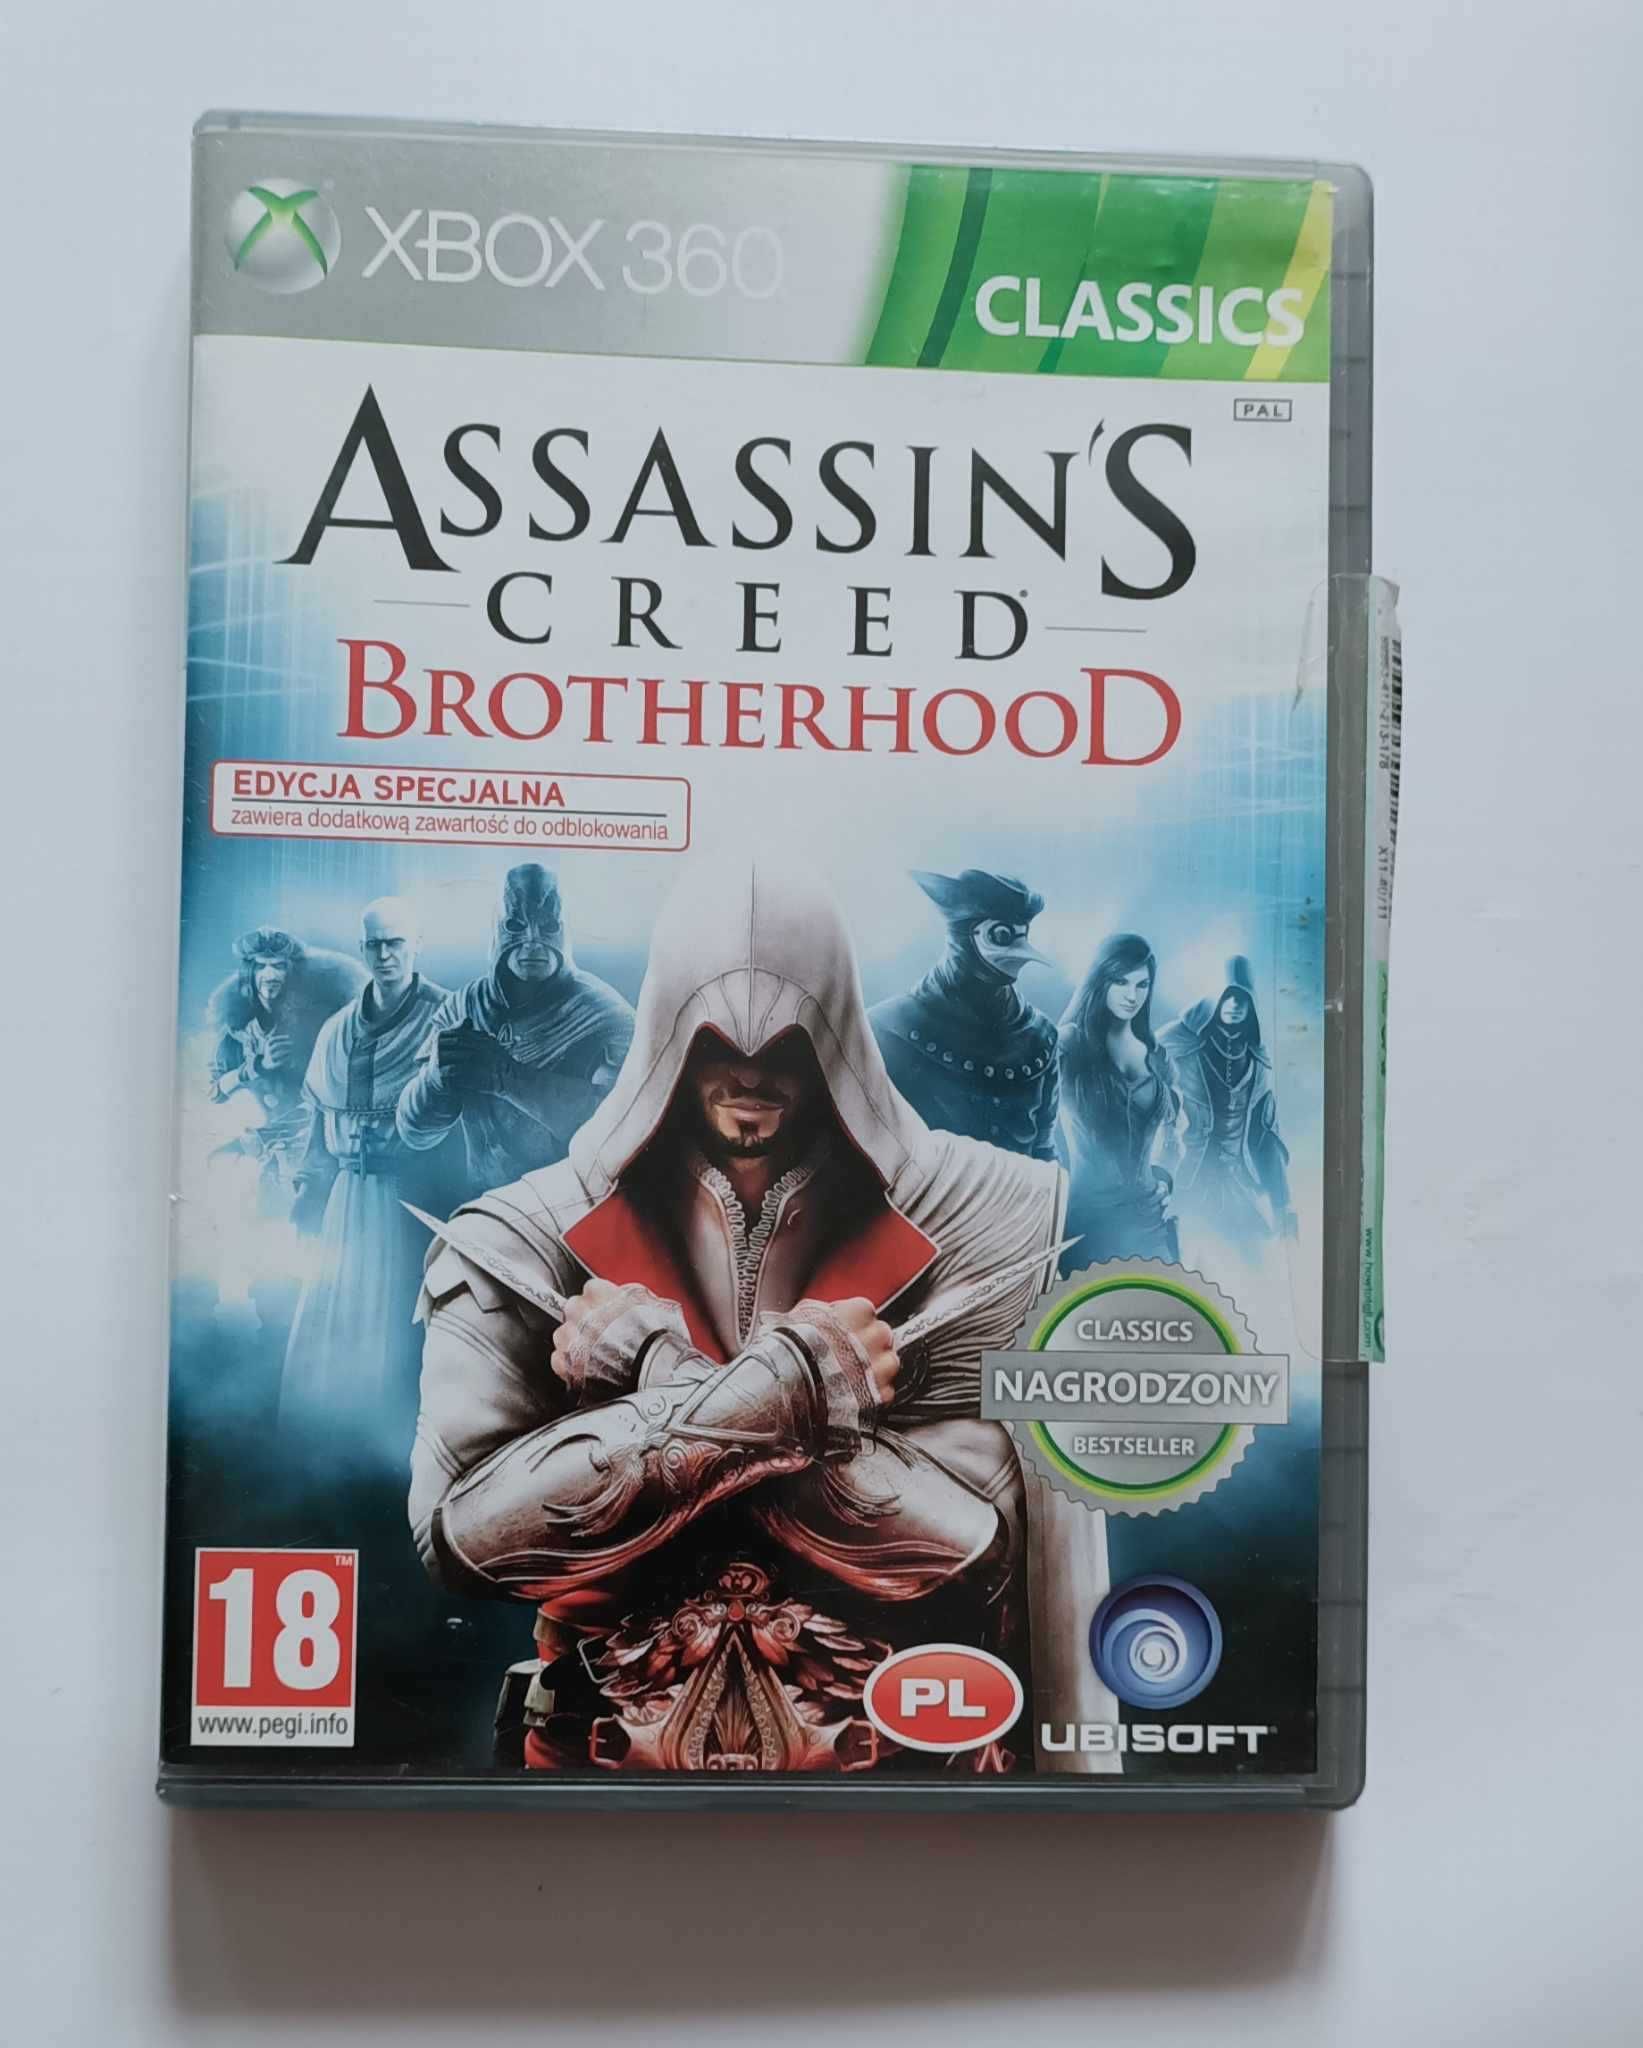 Assassin's creed Brotherhood gra na xbox360 PL edycja specjalna